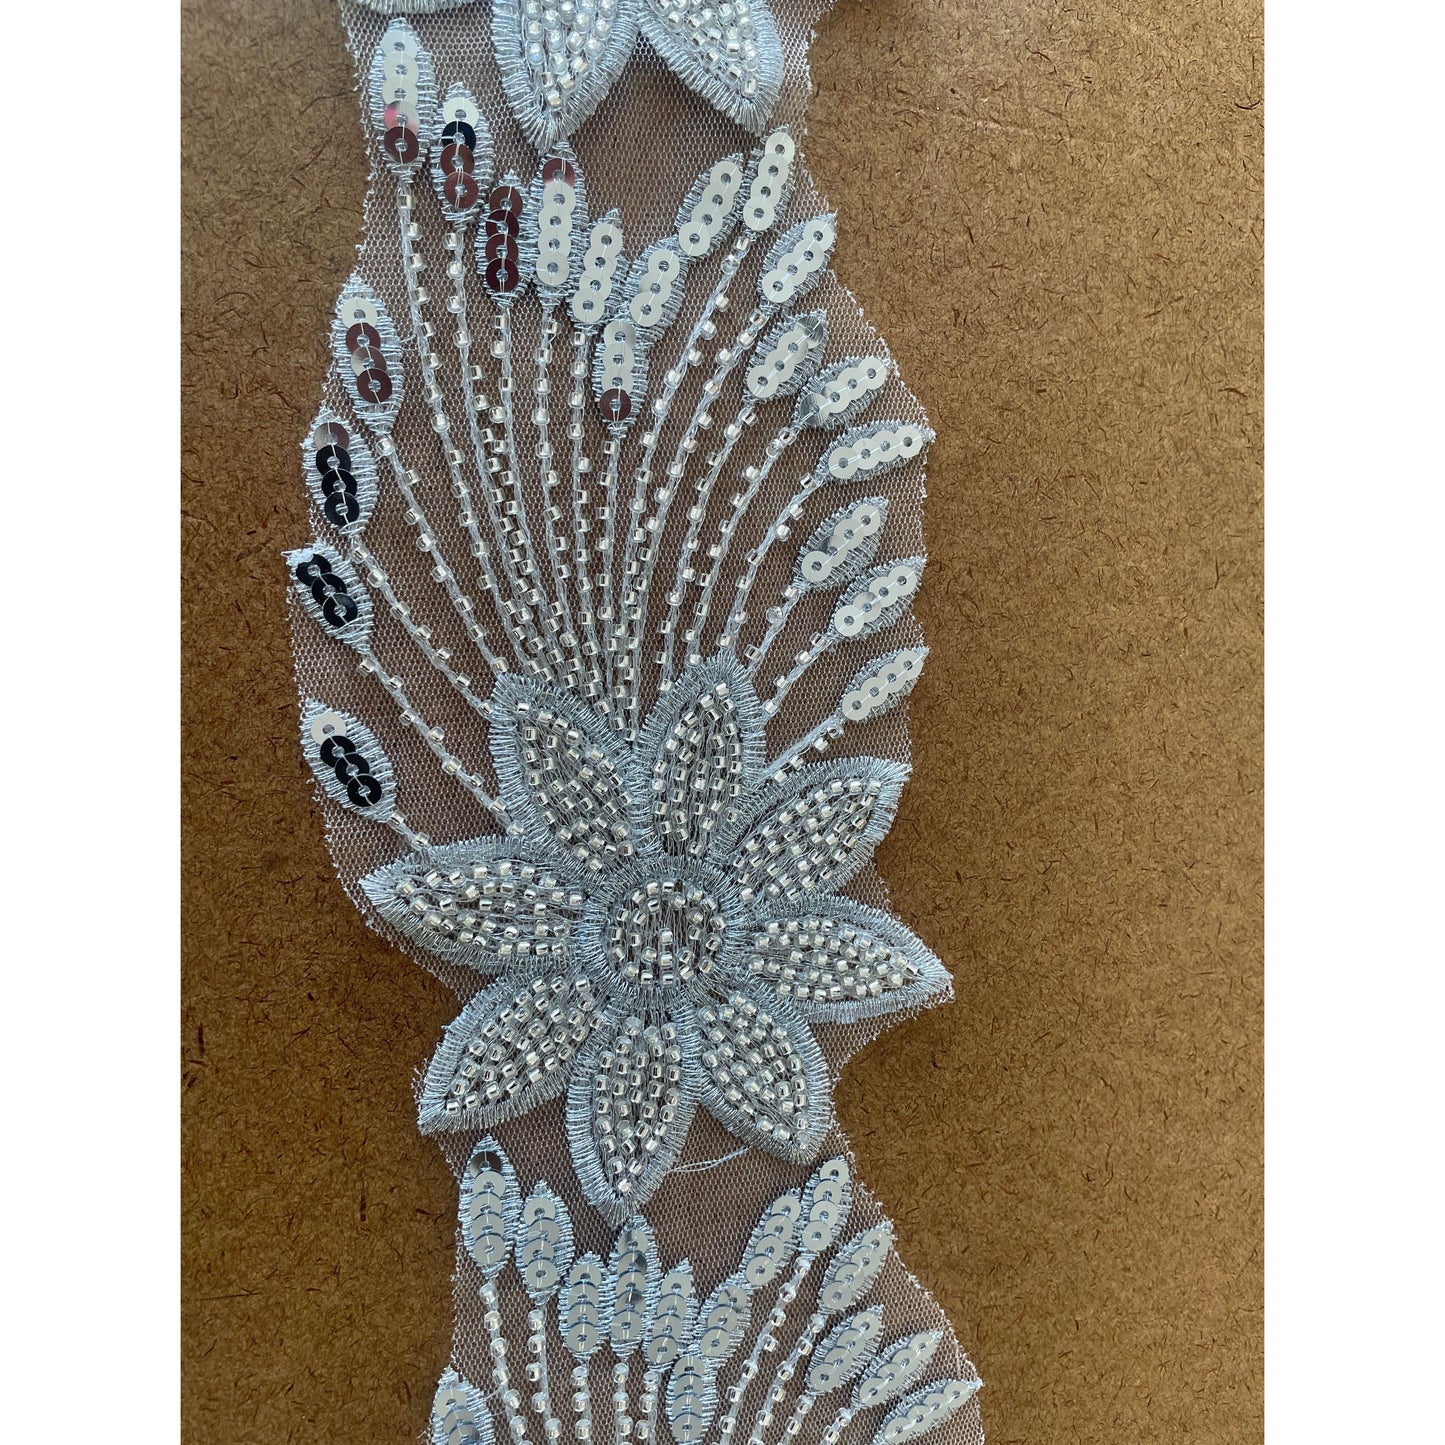 Silver hand beaded sequin appliqué (trim)